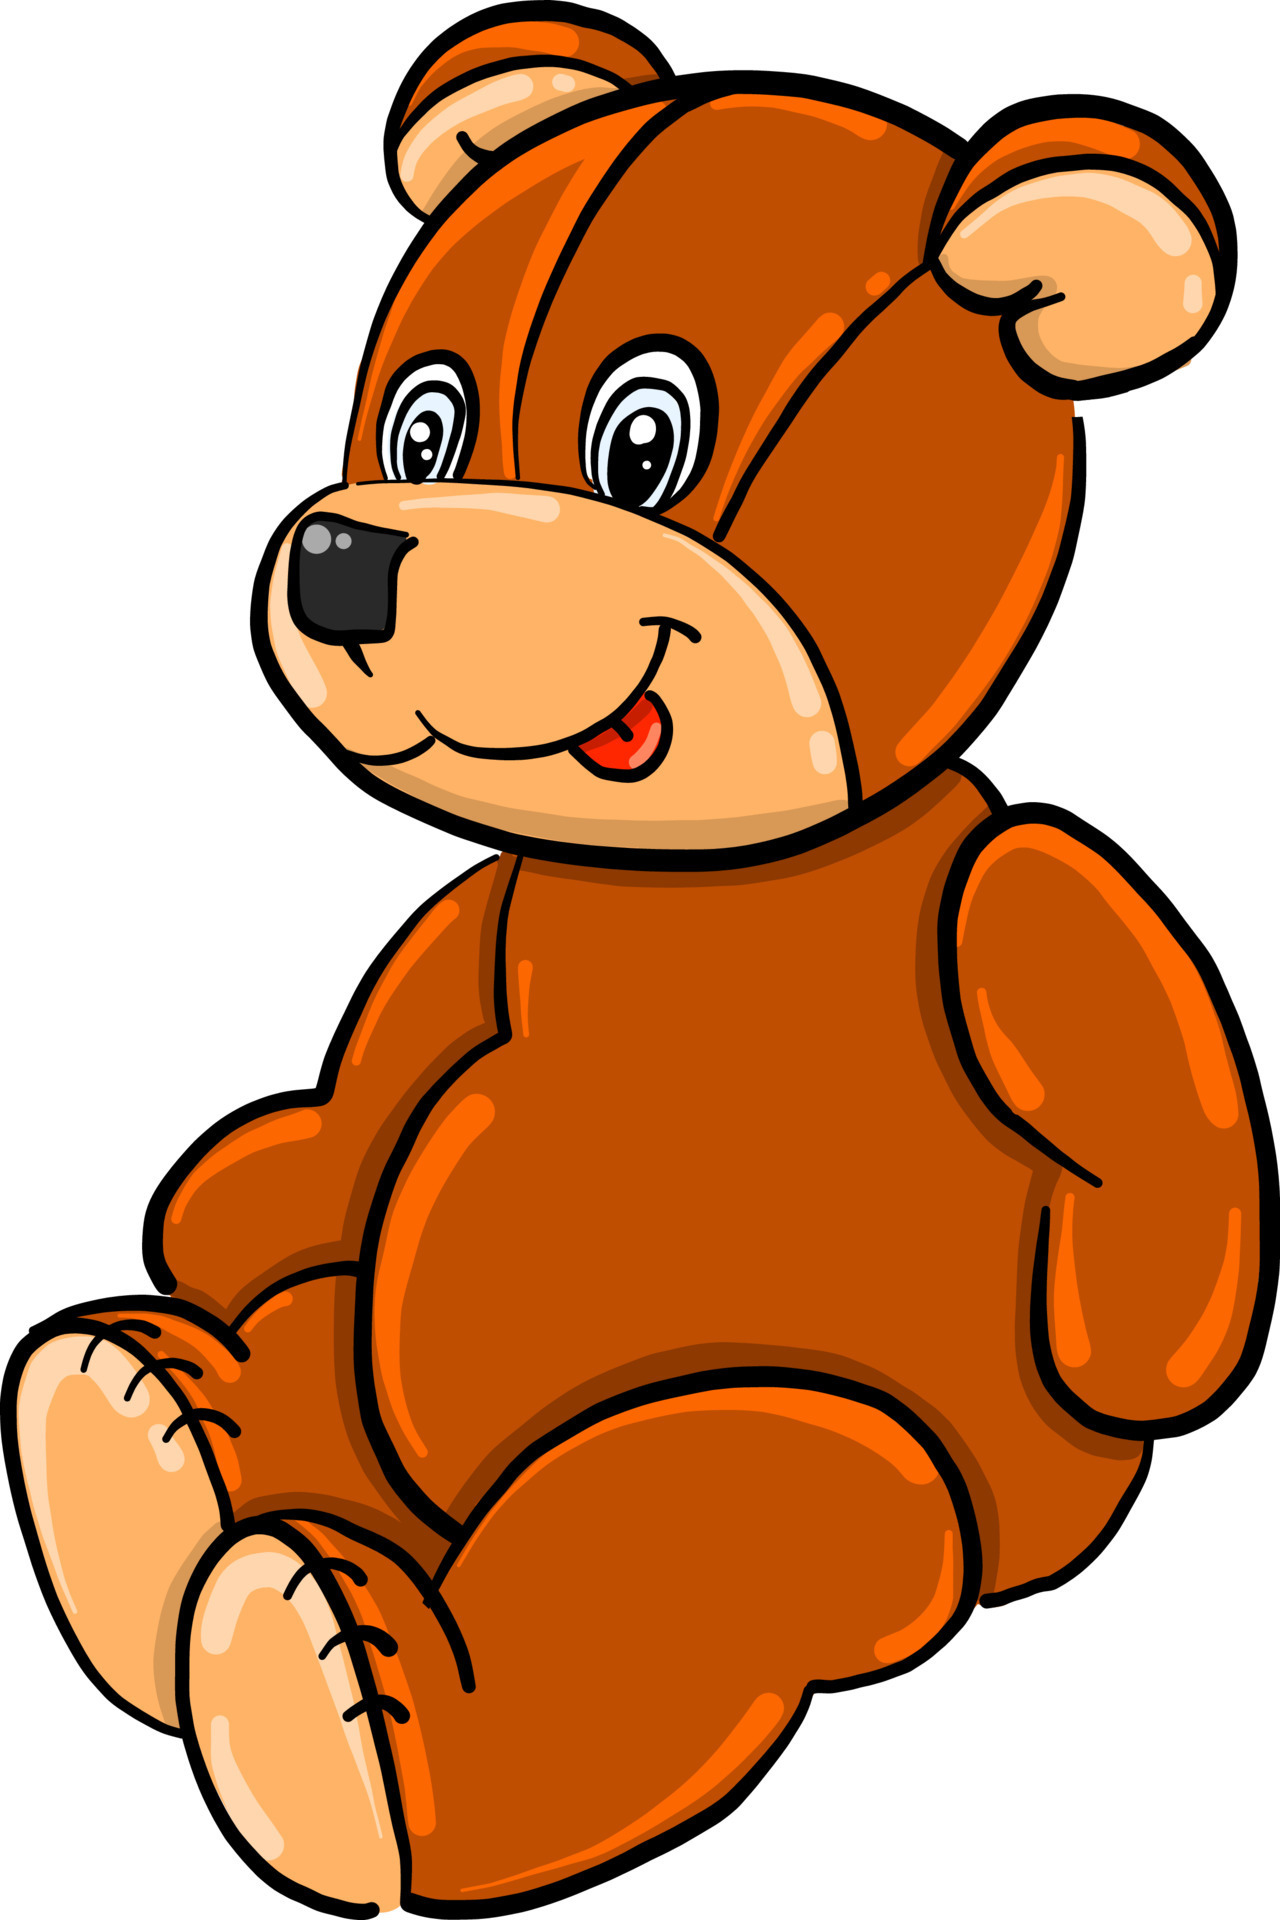 Teddy bear , illustration, vector on white background 13759493 Vector ...